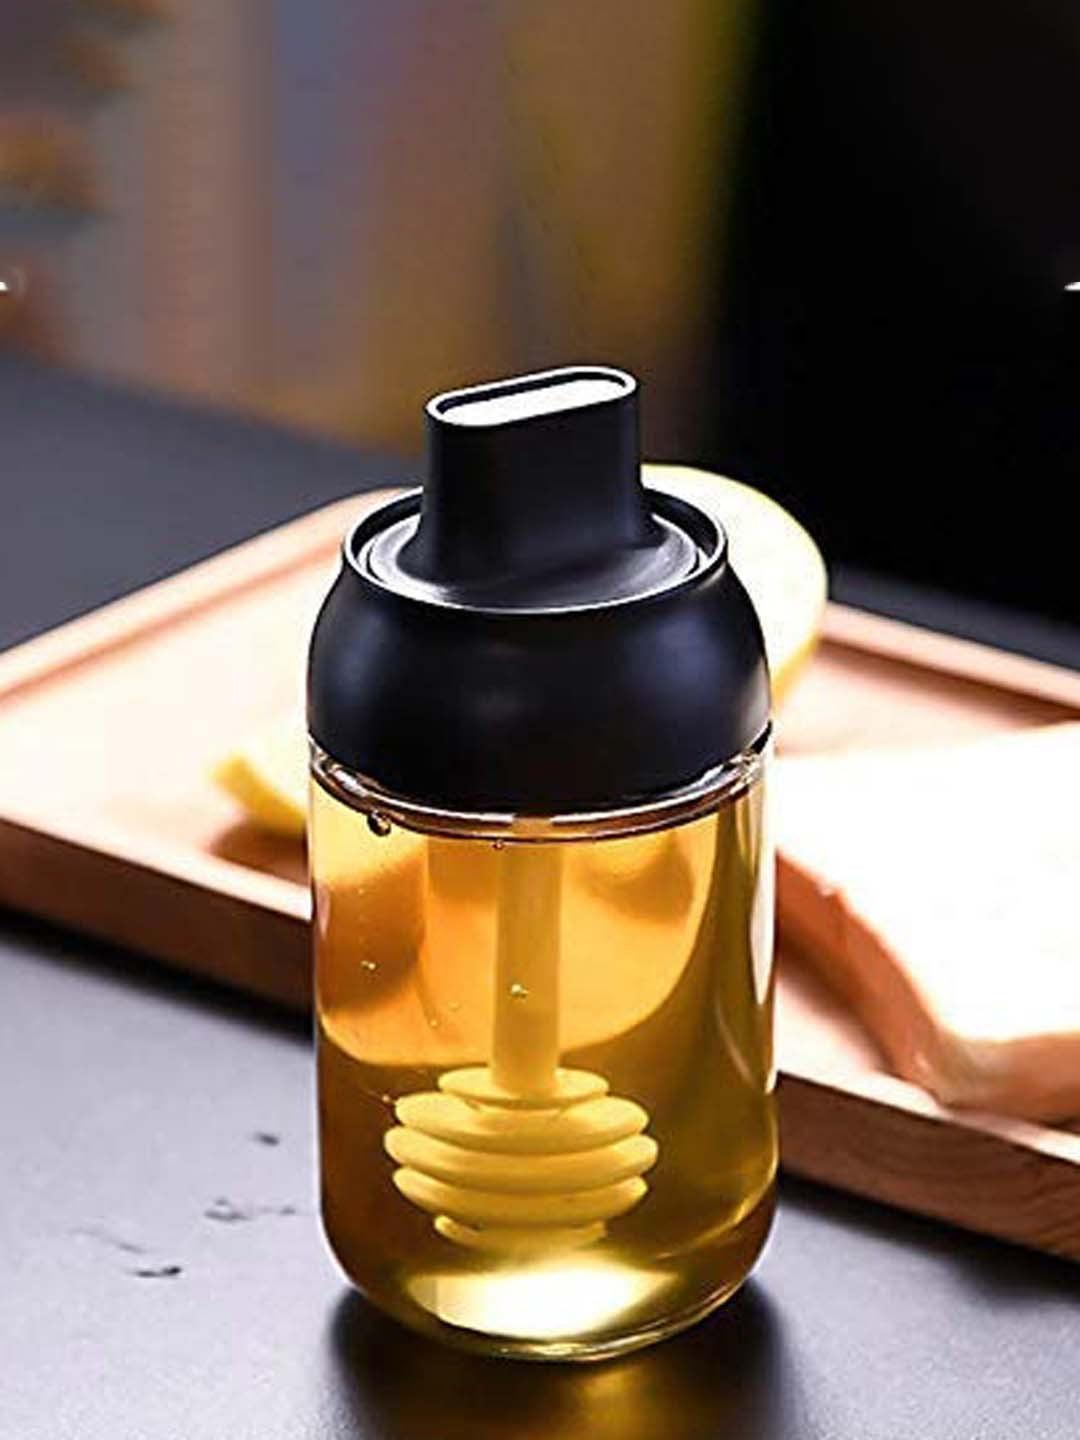 Market99 280Ml Honey Glass Jar With Dipper - MARKET 99